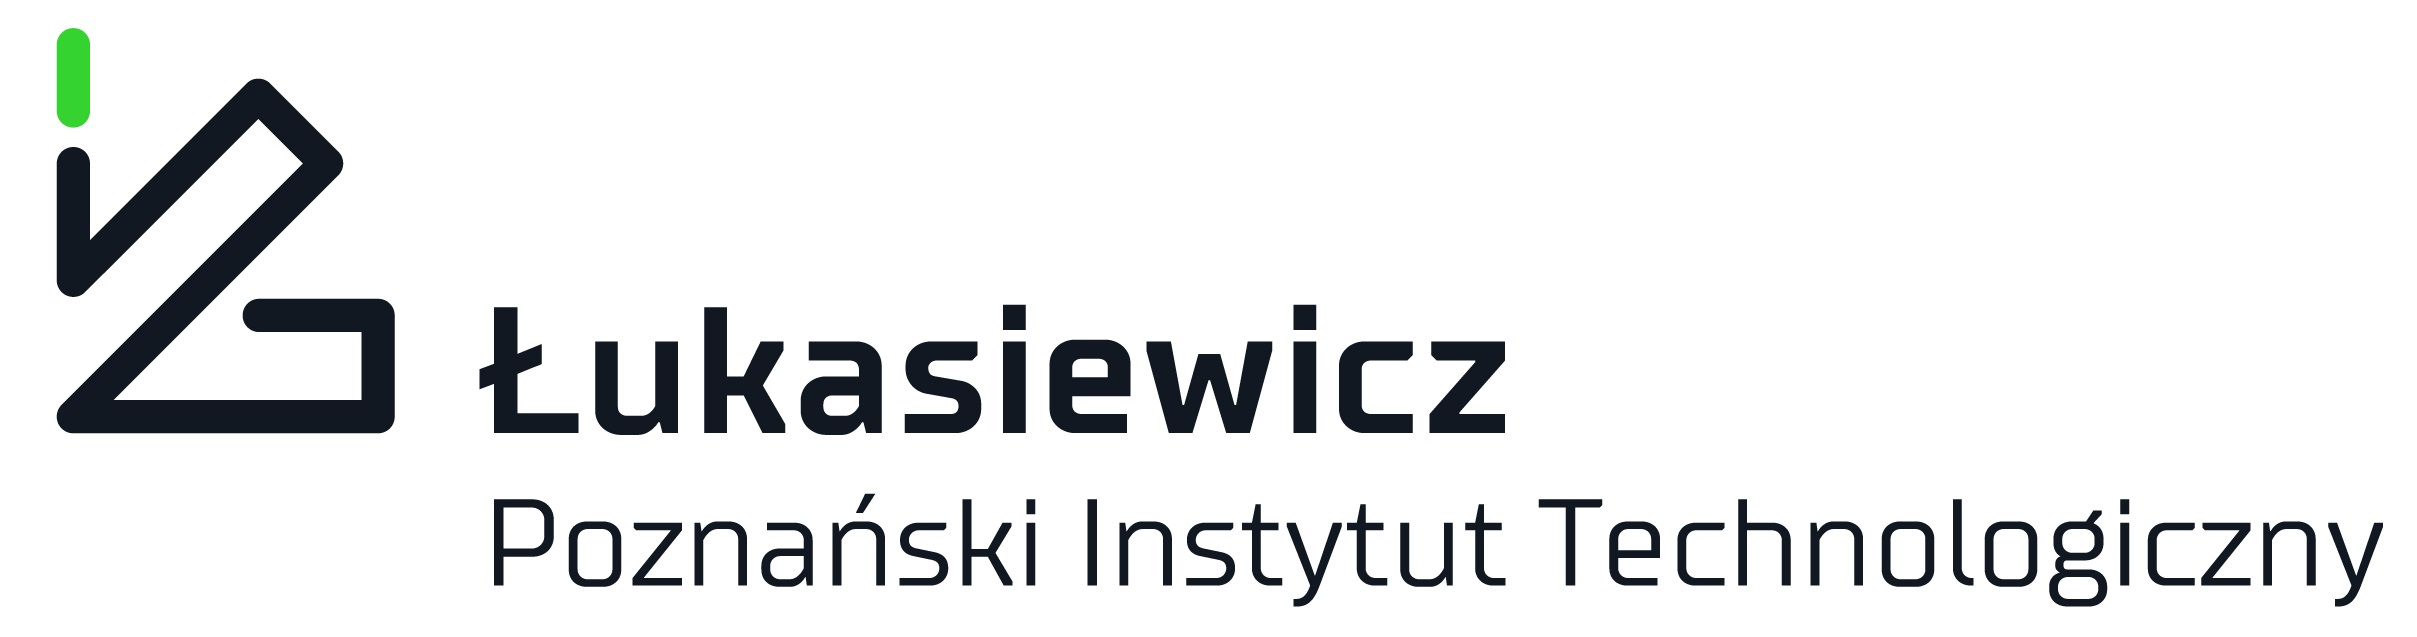 Logo Poznański Instytut Technologiczny